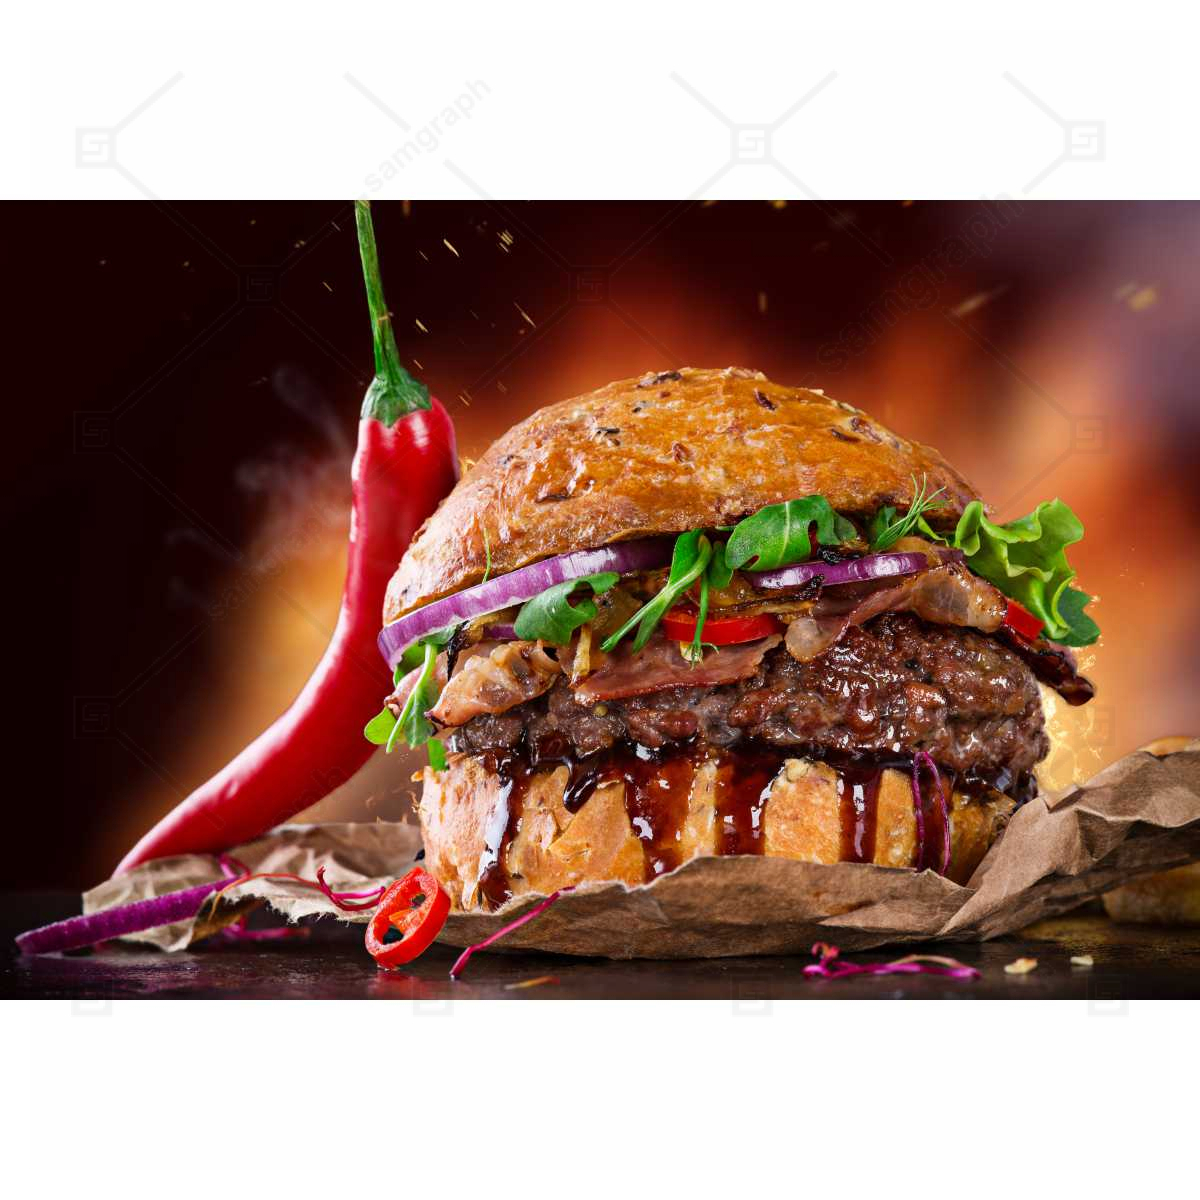 High quality photo of juicy hamburger with fire and pepper lettuce onion parsley 1 طرح وکتور لوگو آرایشگاه و باربر شاپ - ست لوگو آریشگاه مردانه